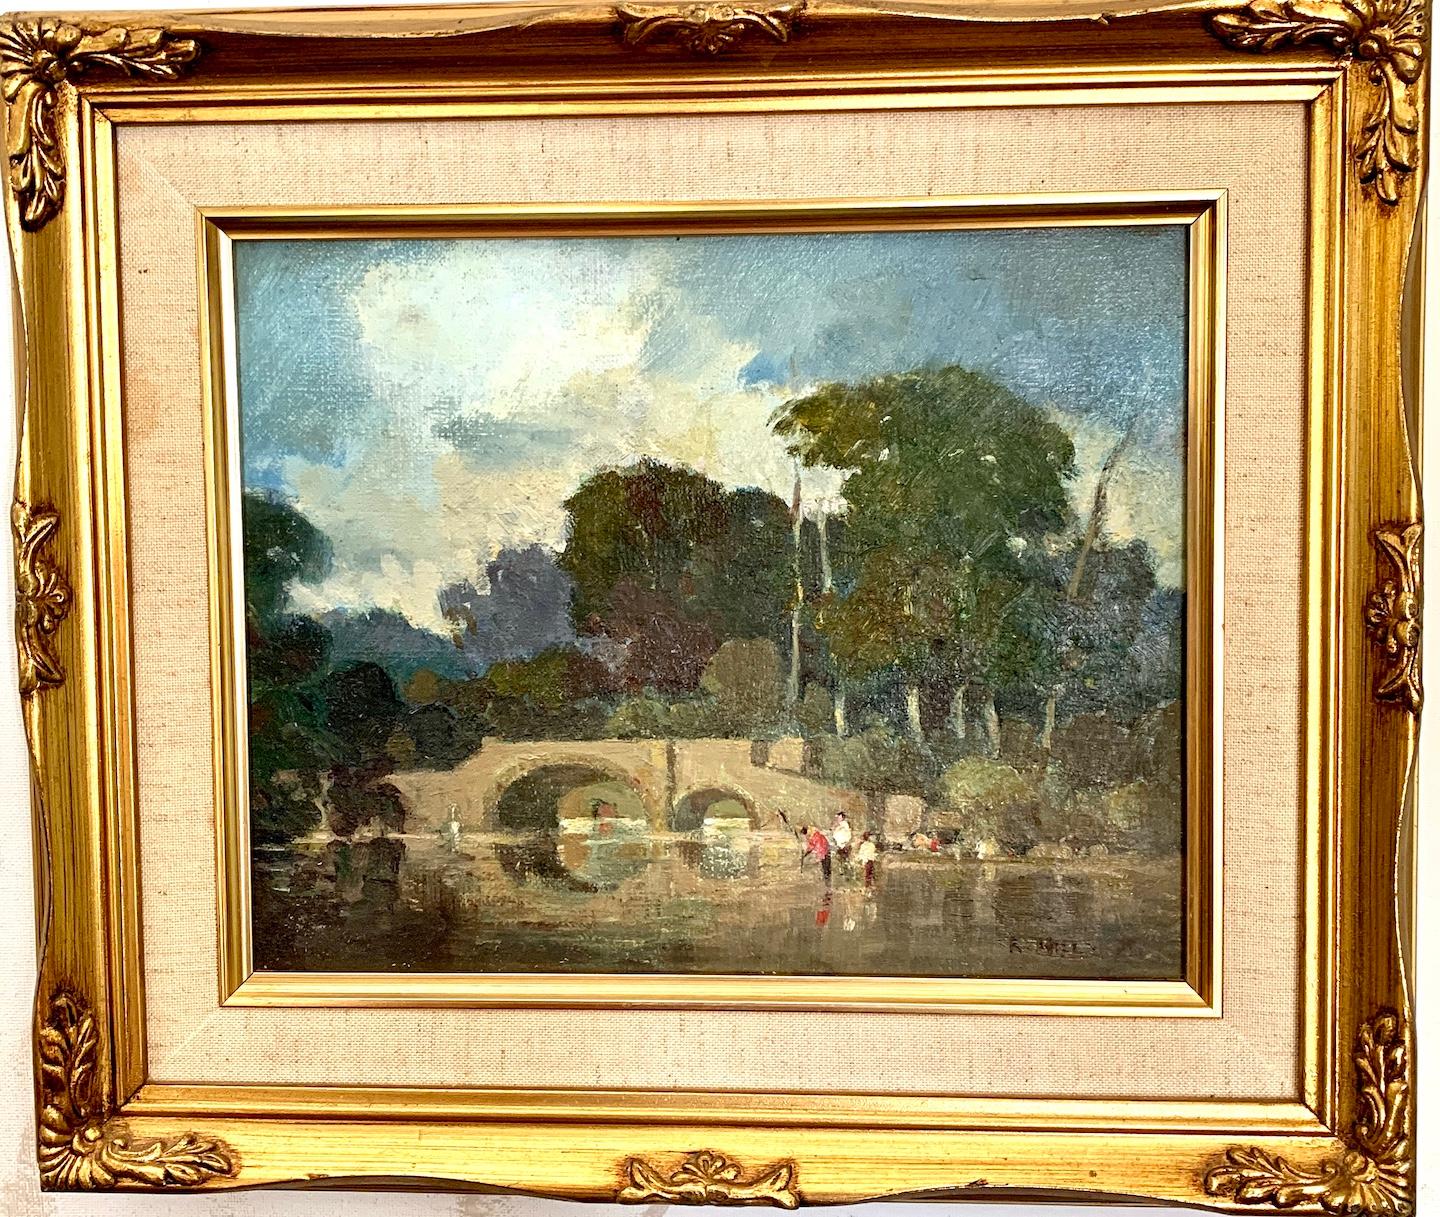 Robert W Hill Figurative Painting - 20th Century Modern British Landscape with fisherman, bridge, trees, 